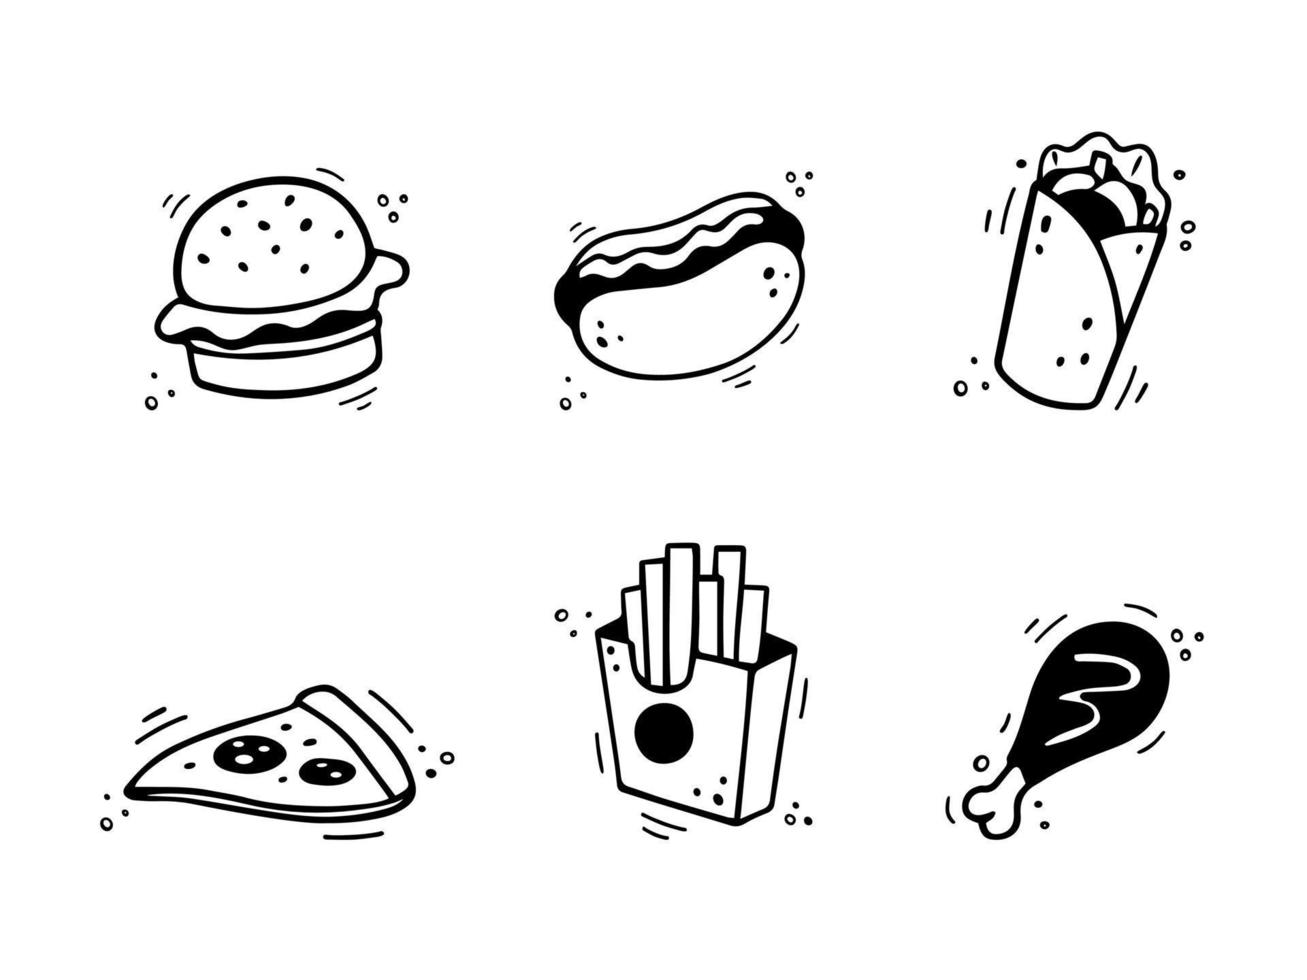 Phand gezeichnete Fast-Food-Symbole. skizze von snackelementen - burger, pommes frites box, pizza, döner, hähnchenkeule. fast-food-illustration im gekritzelstil. Fast-Food-Sammlung. vektor